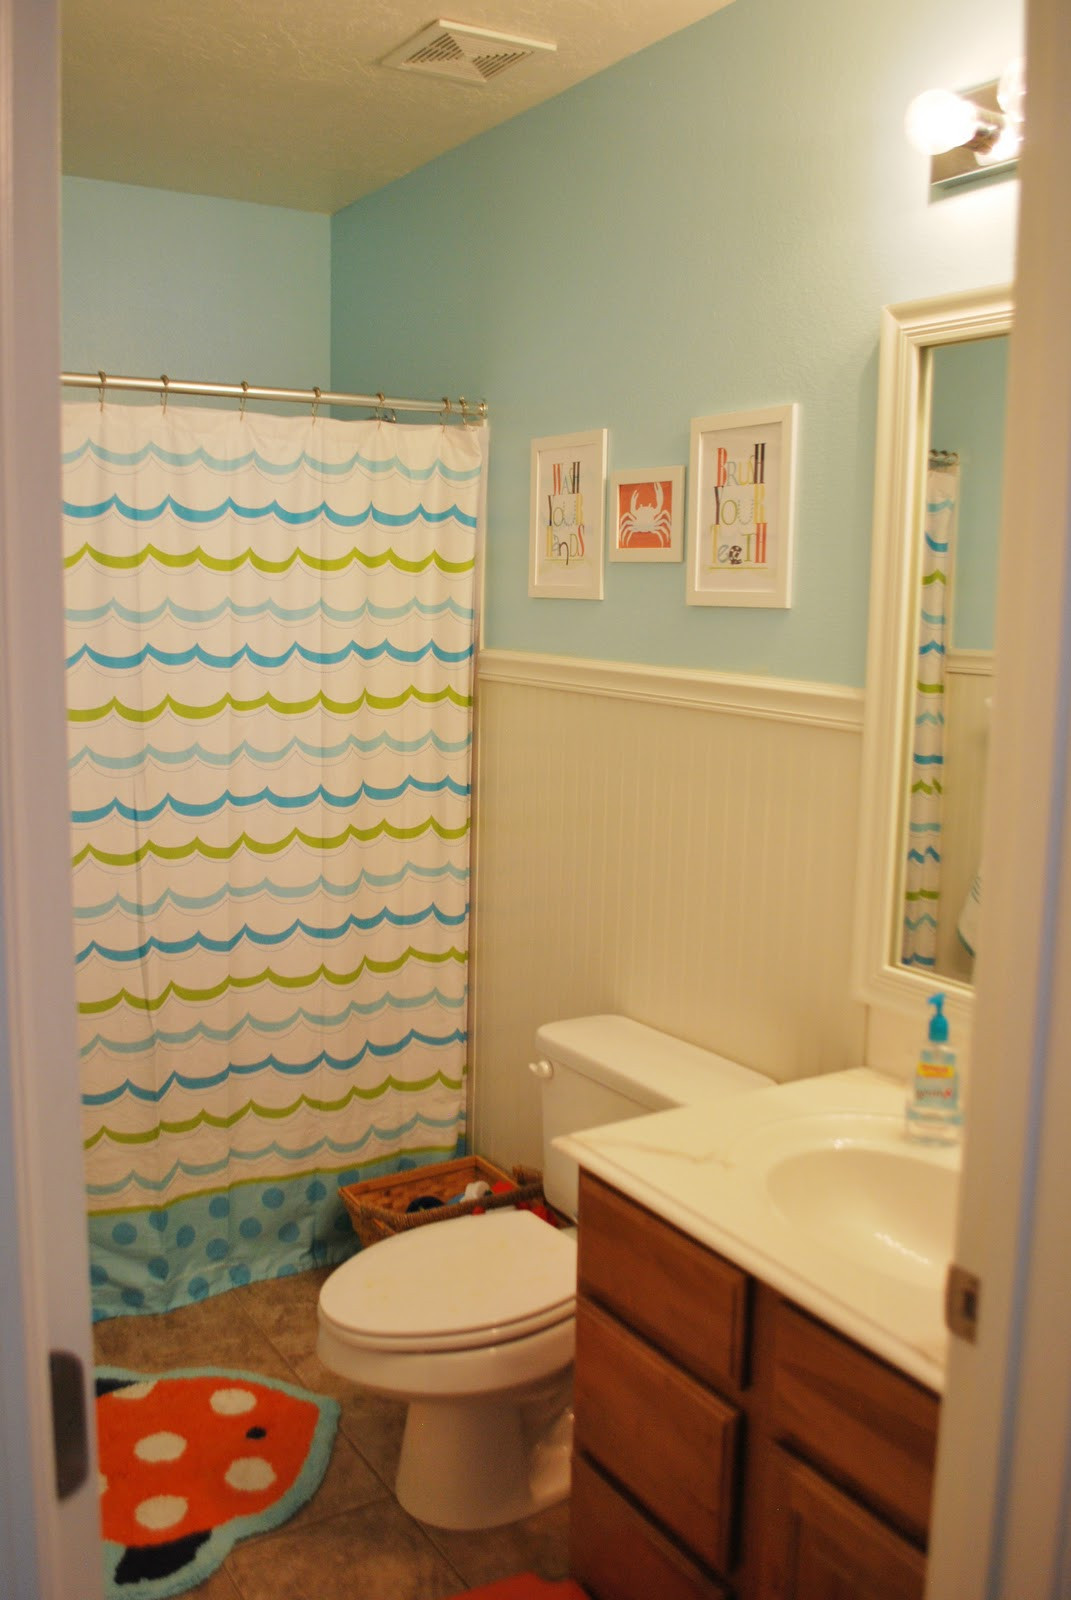 Kids Bath Room Decor
 Remodelaholic